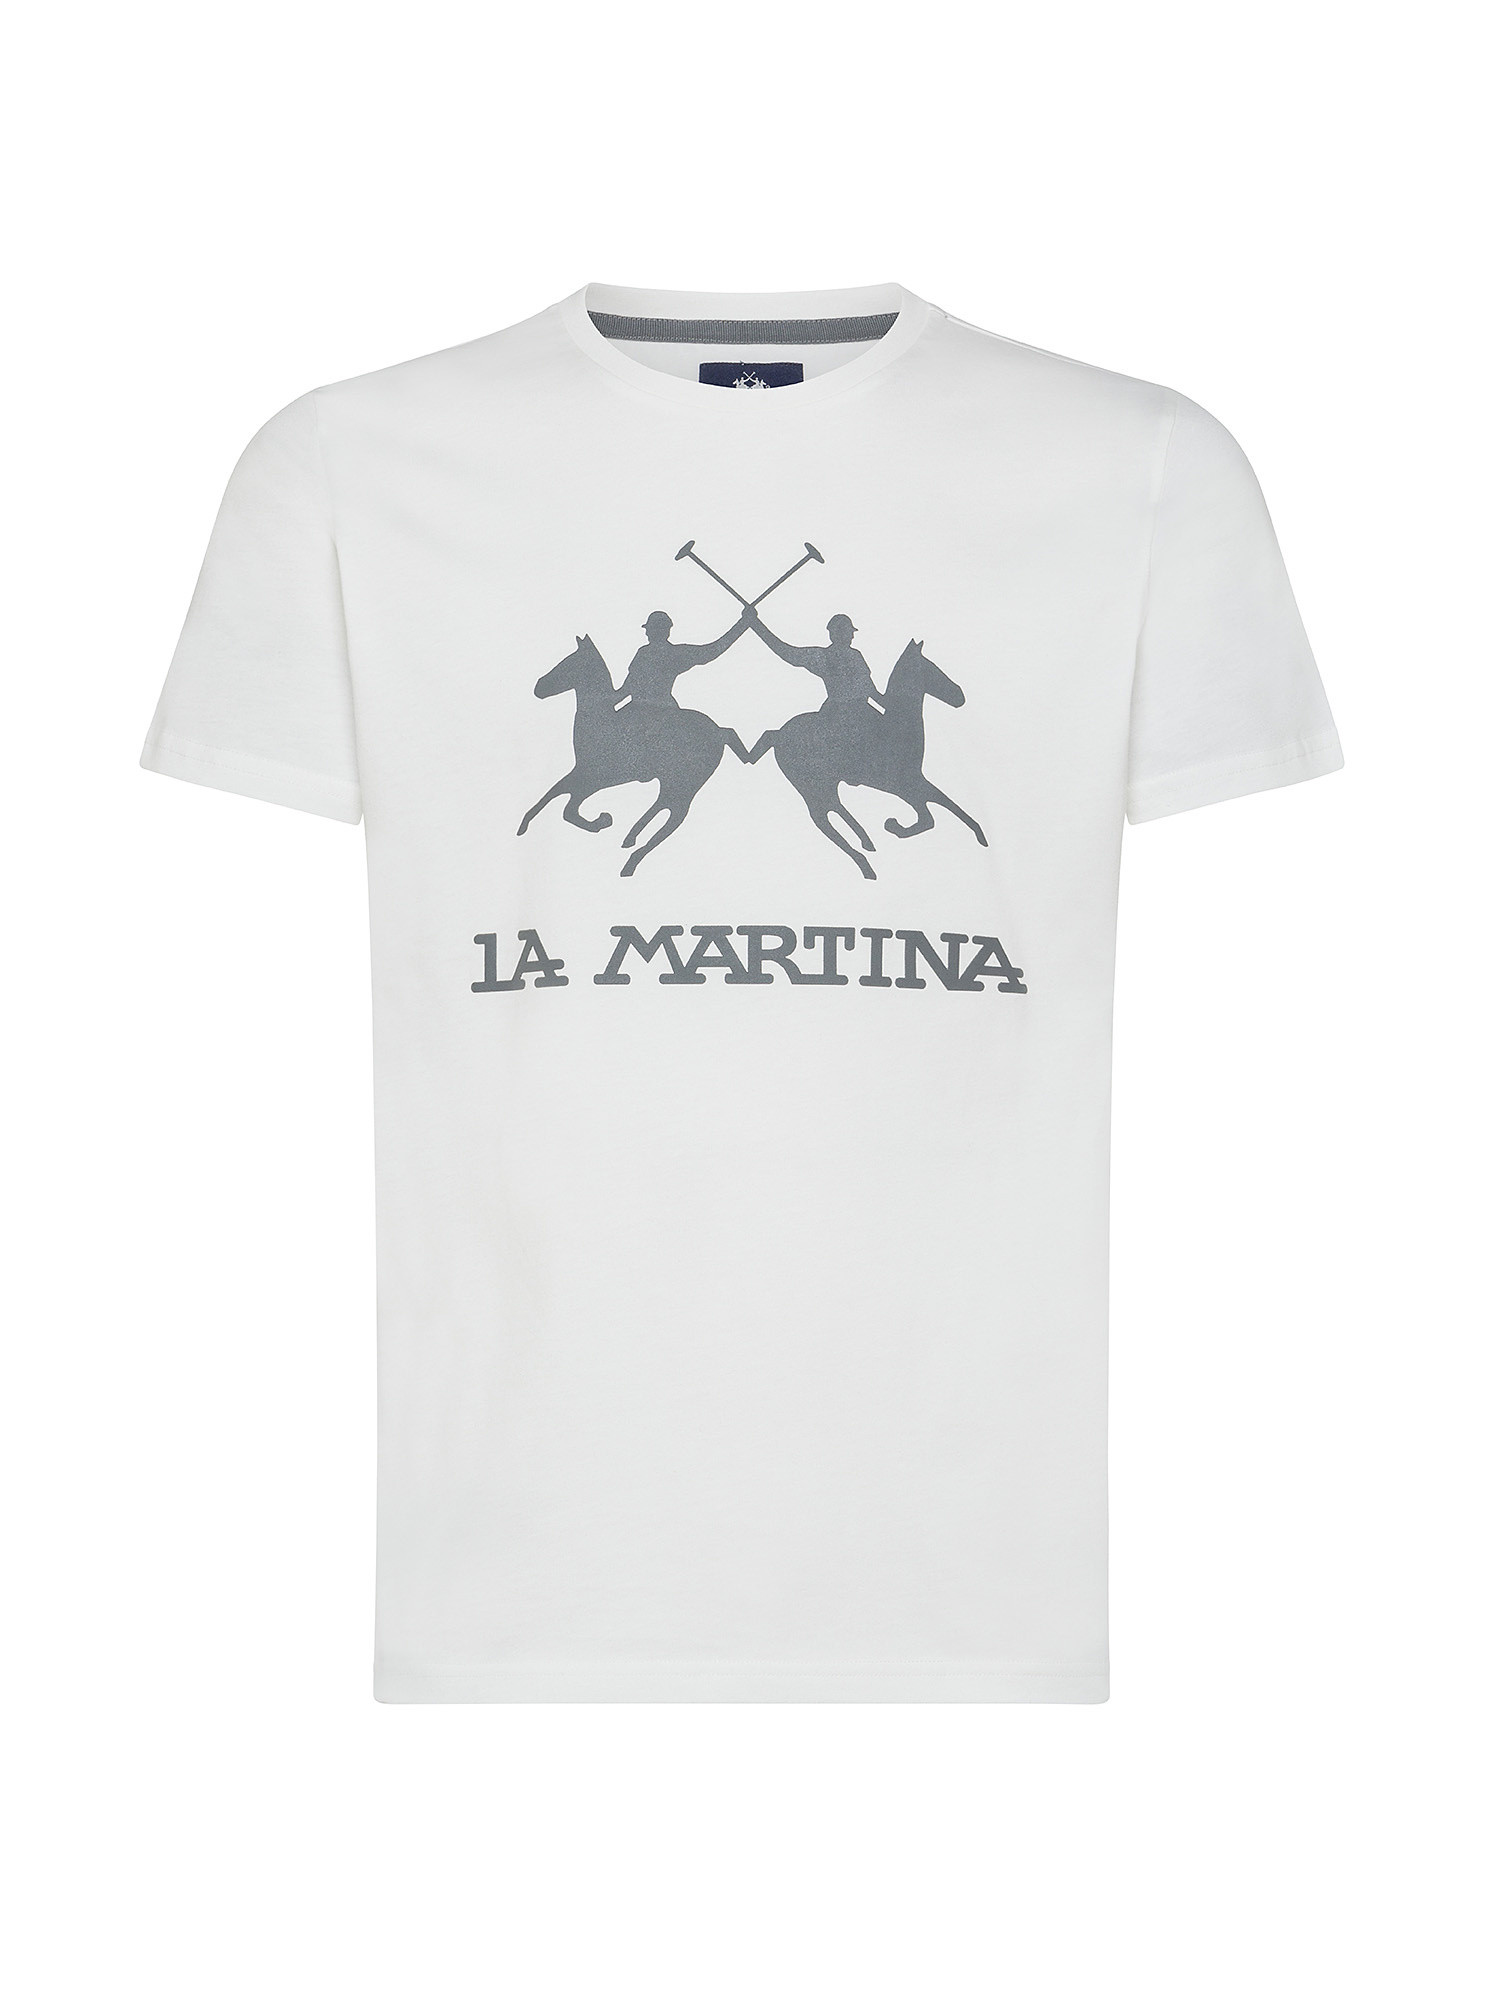 La Martina - T-shirt regular fit in cotone, Bianco, large image number 0